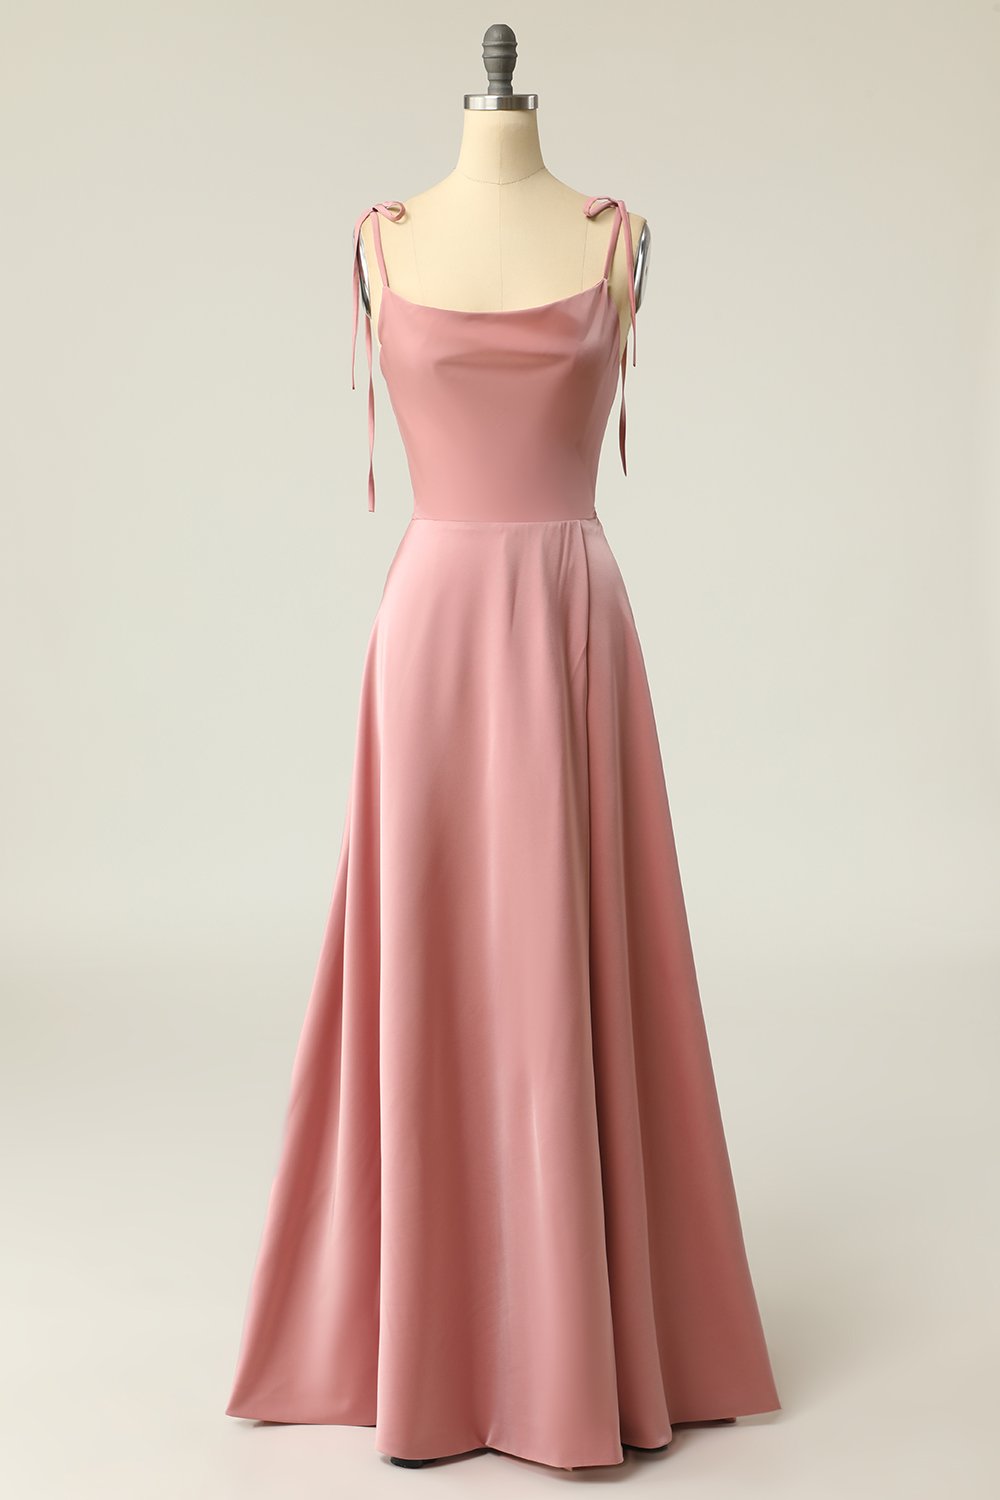 Blush Prom Dresses, Spaghetti Straps Long Prom Dress with Bowknot